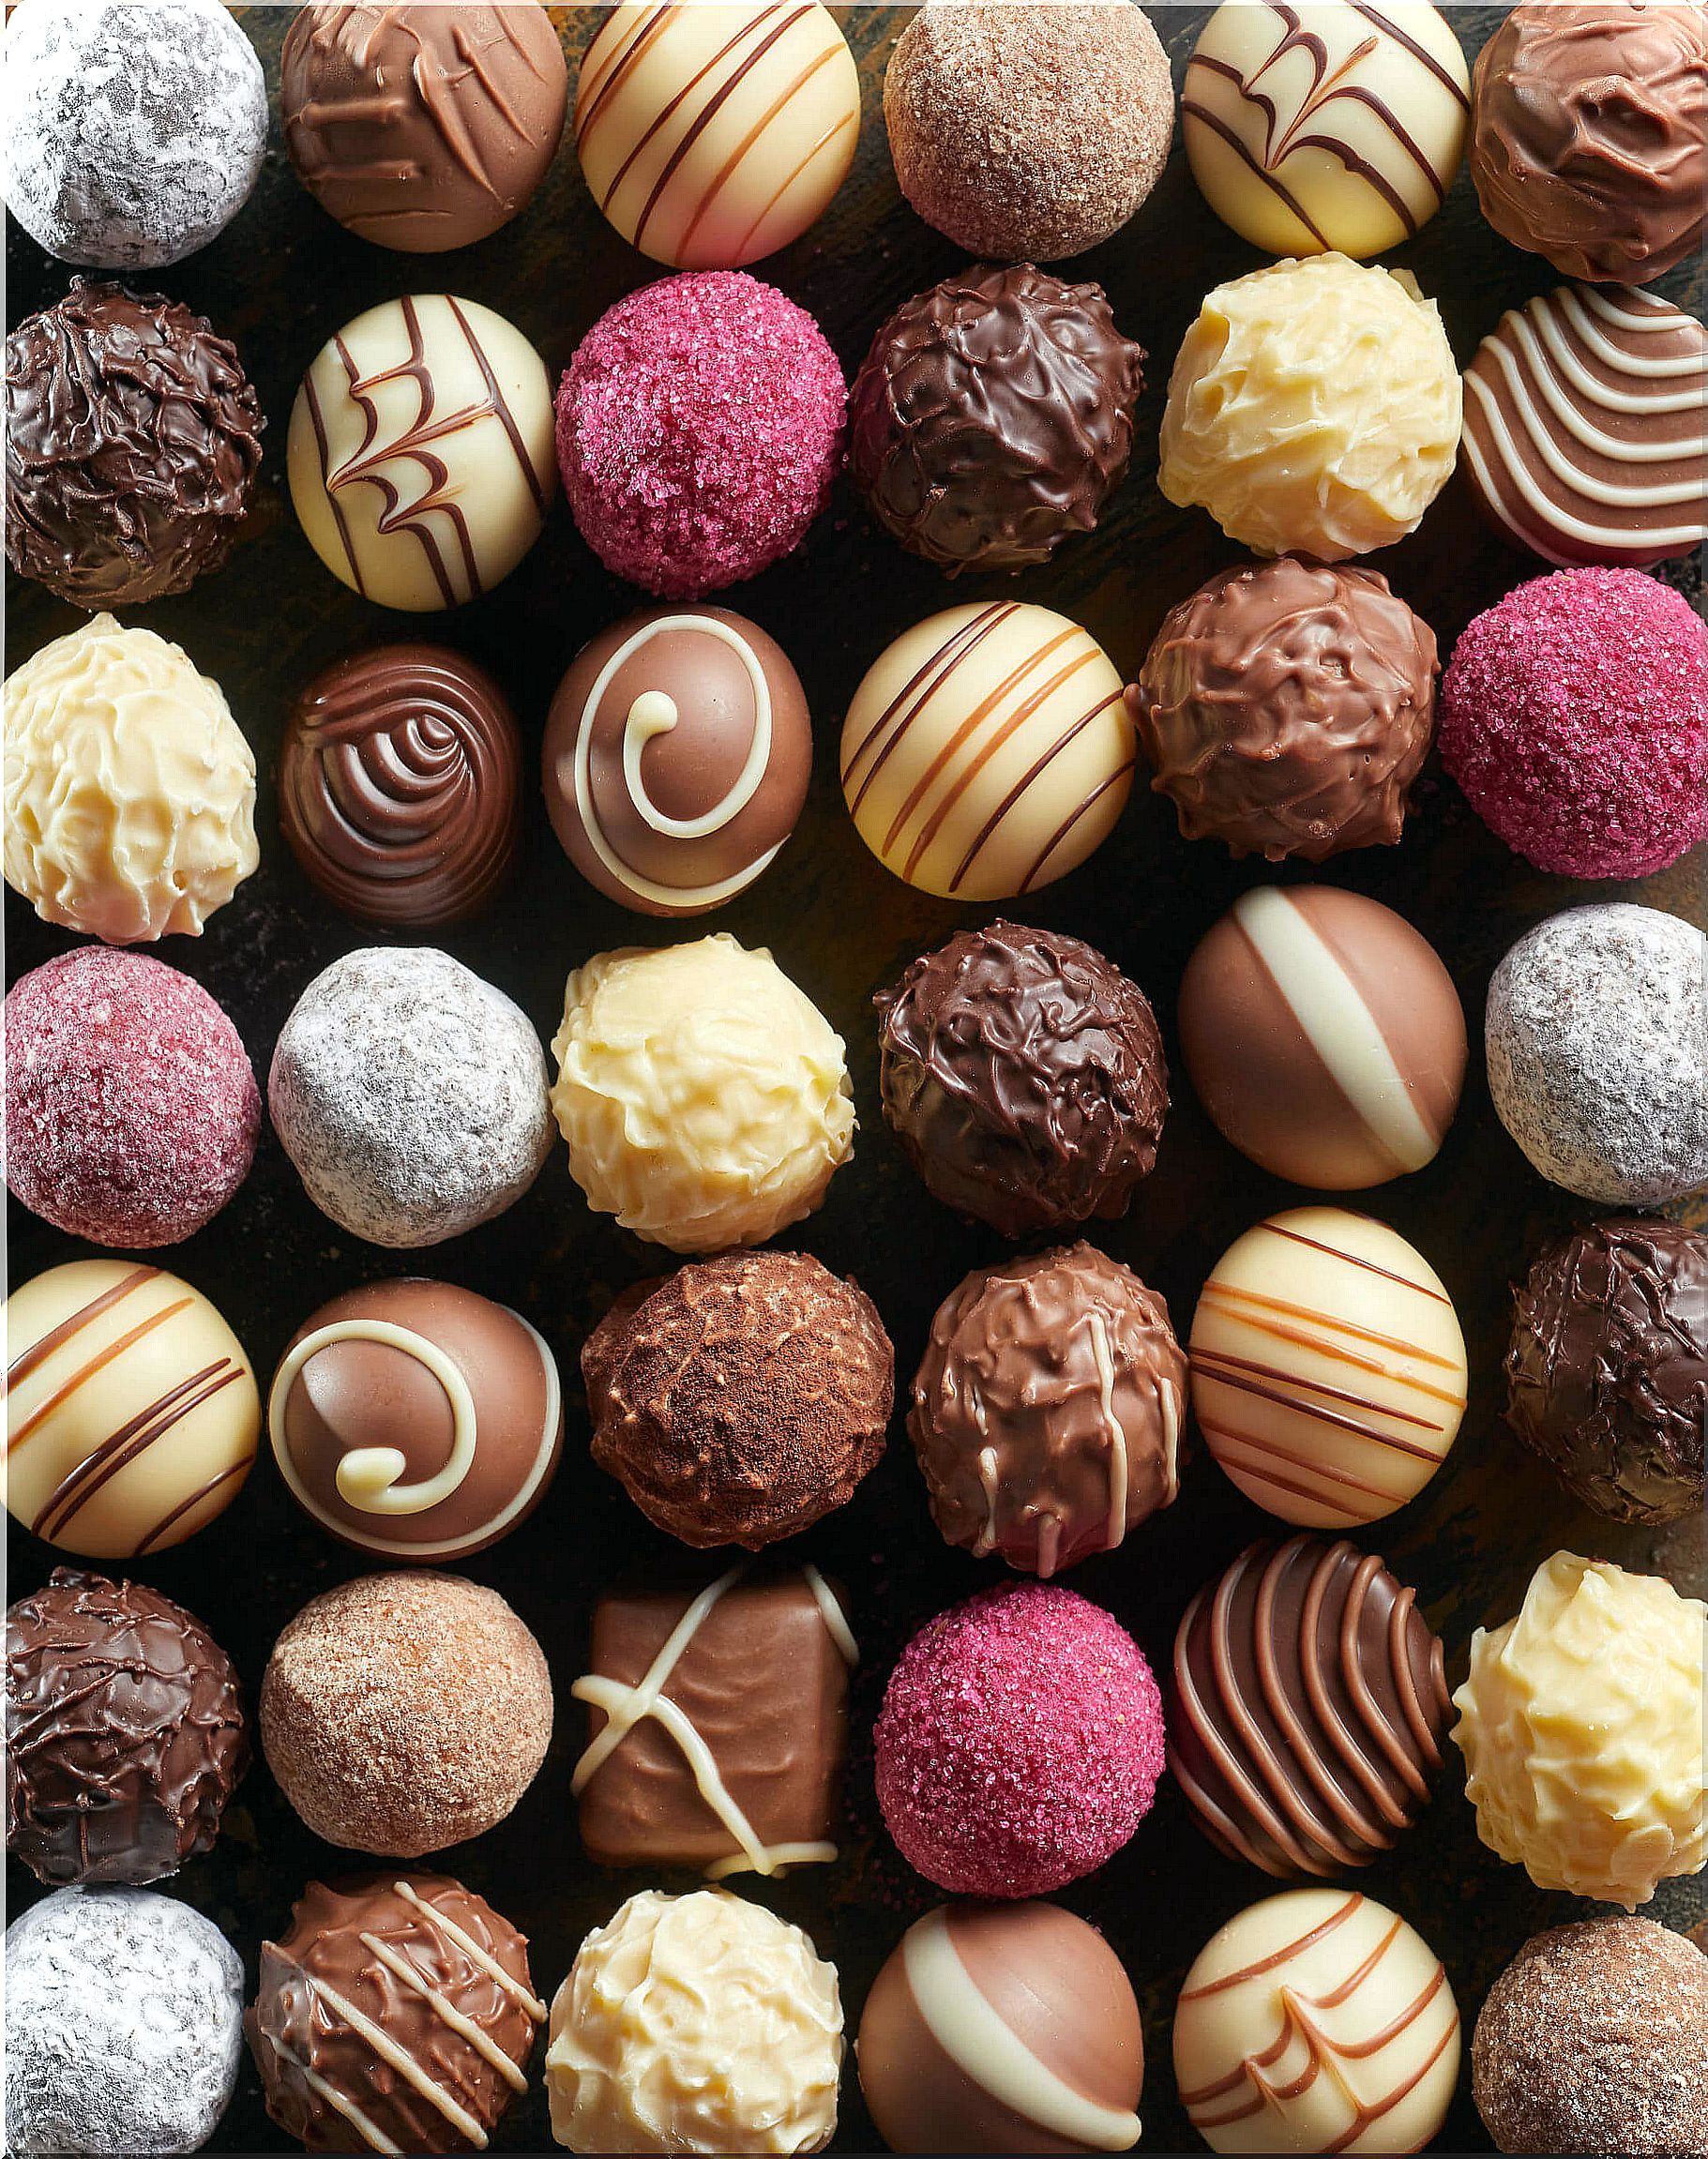 To lose weight, avoid sugar chocolates.